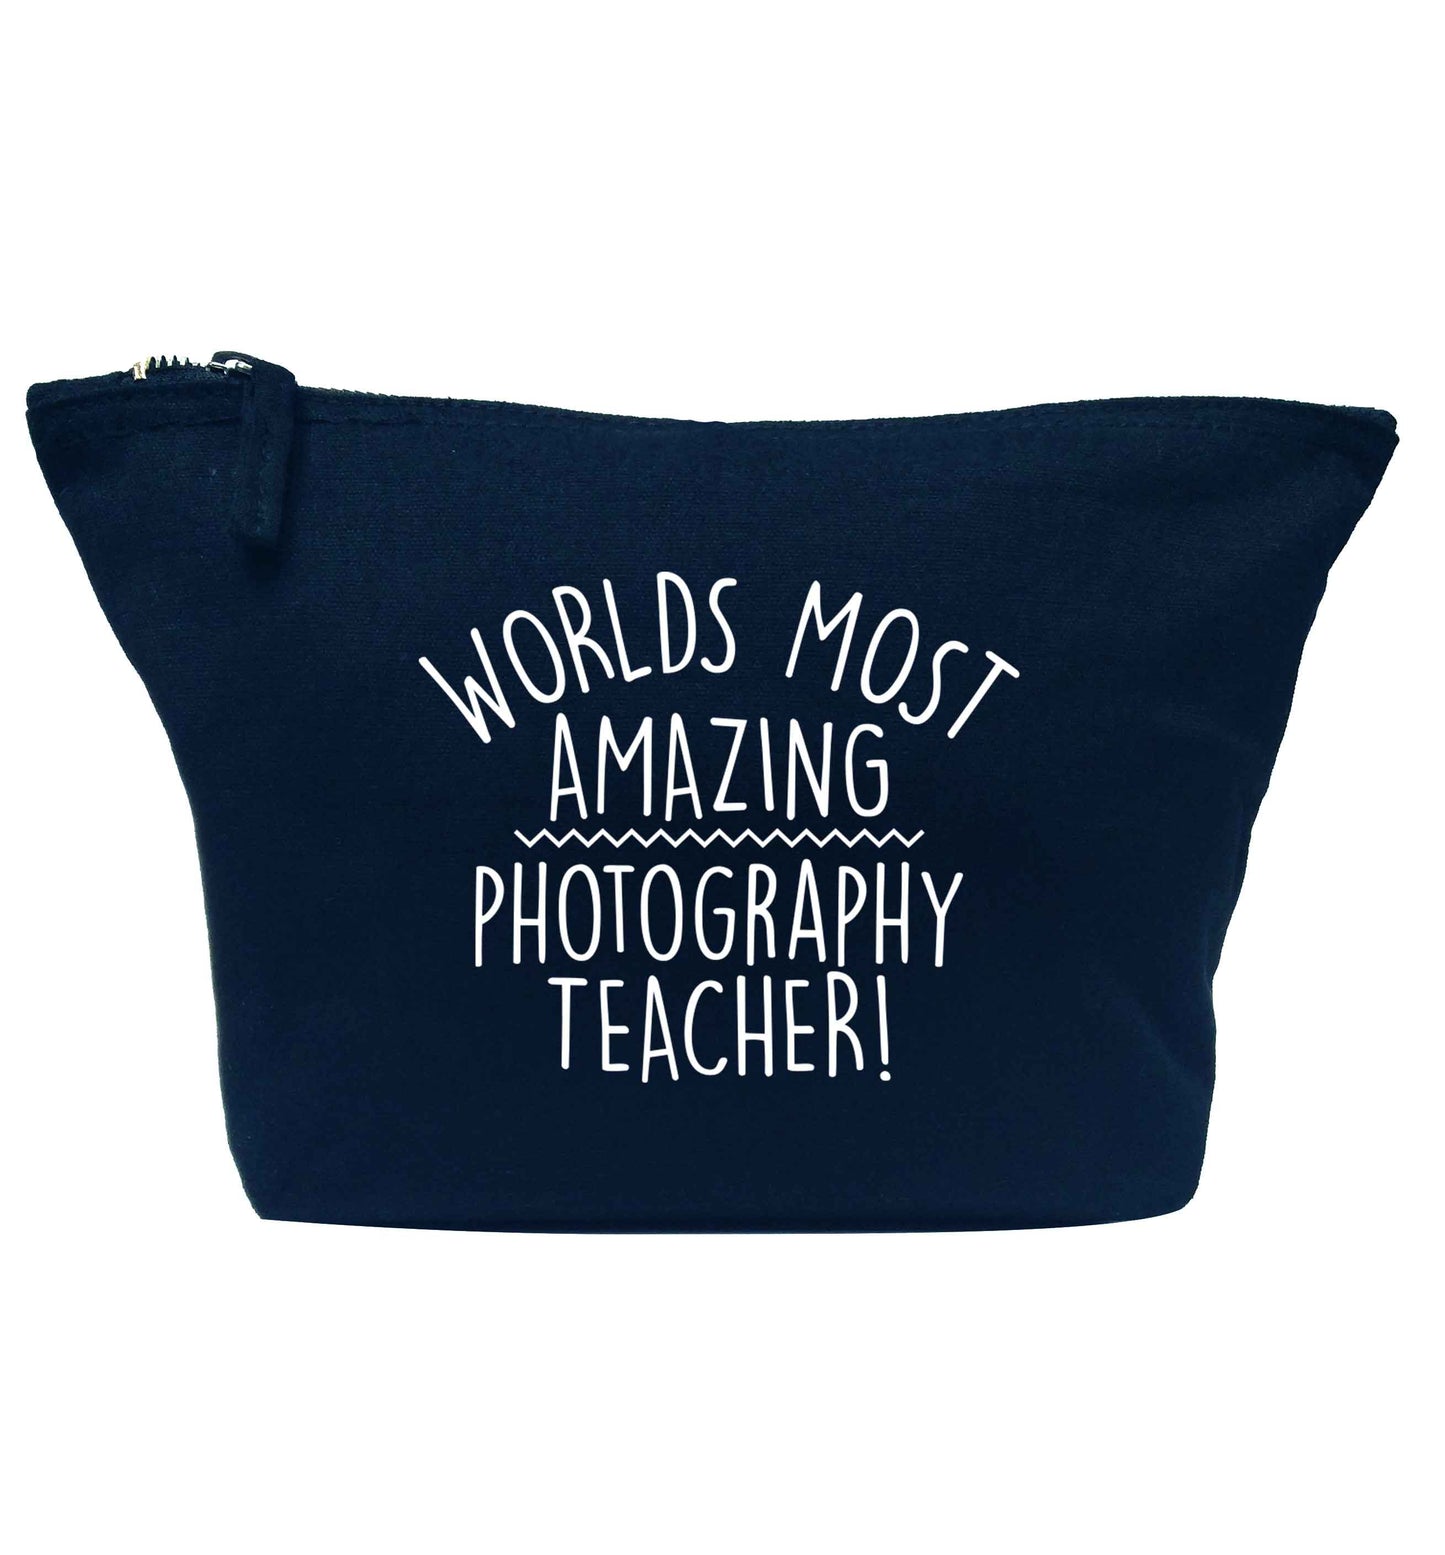 Worlds most amazing photography teacher navy makeup bag